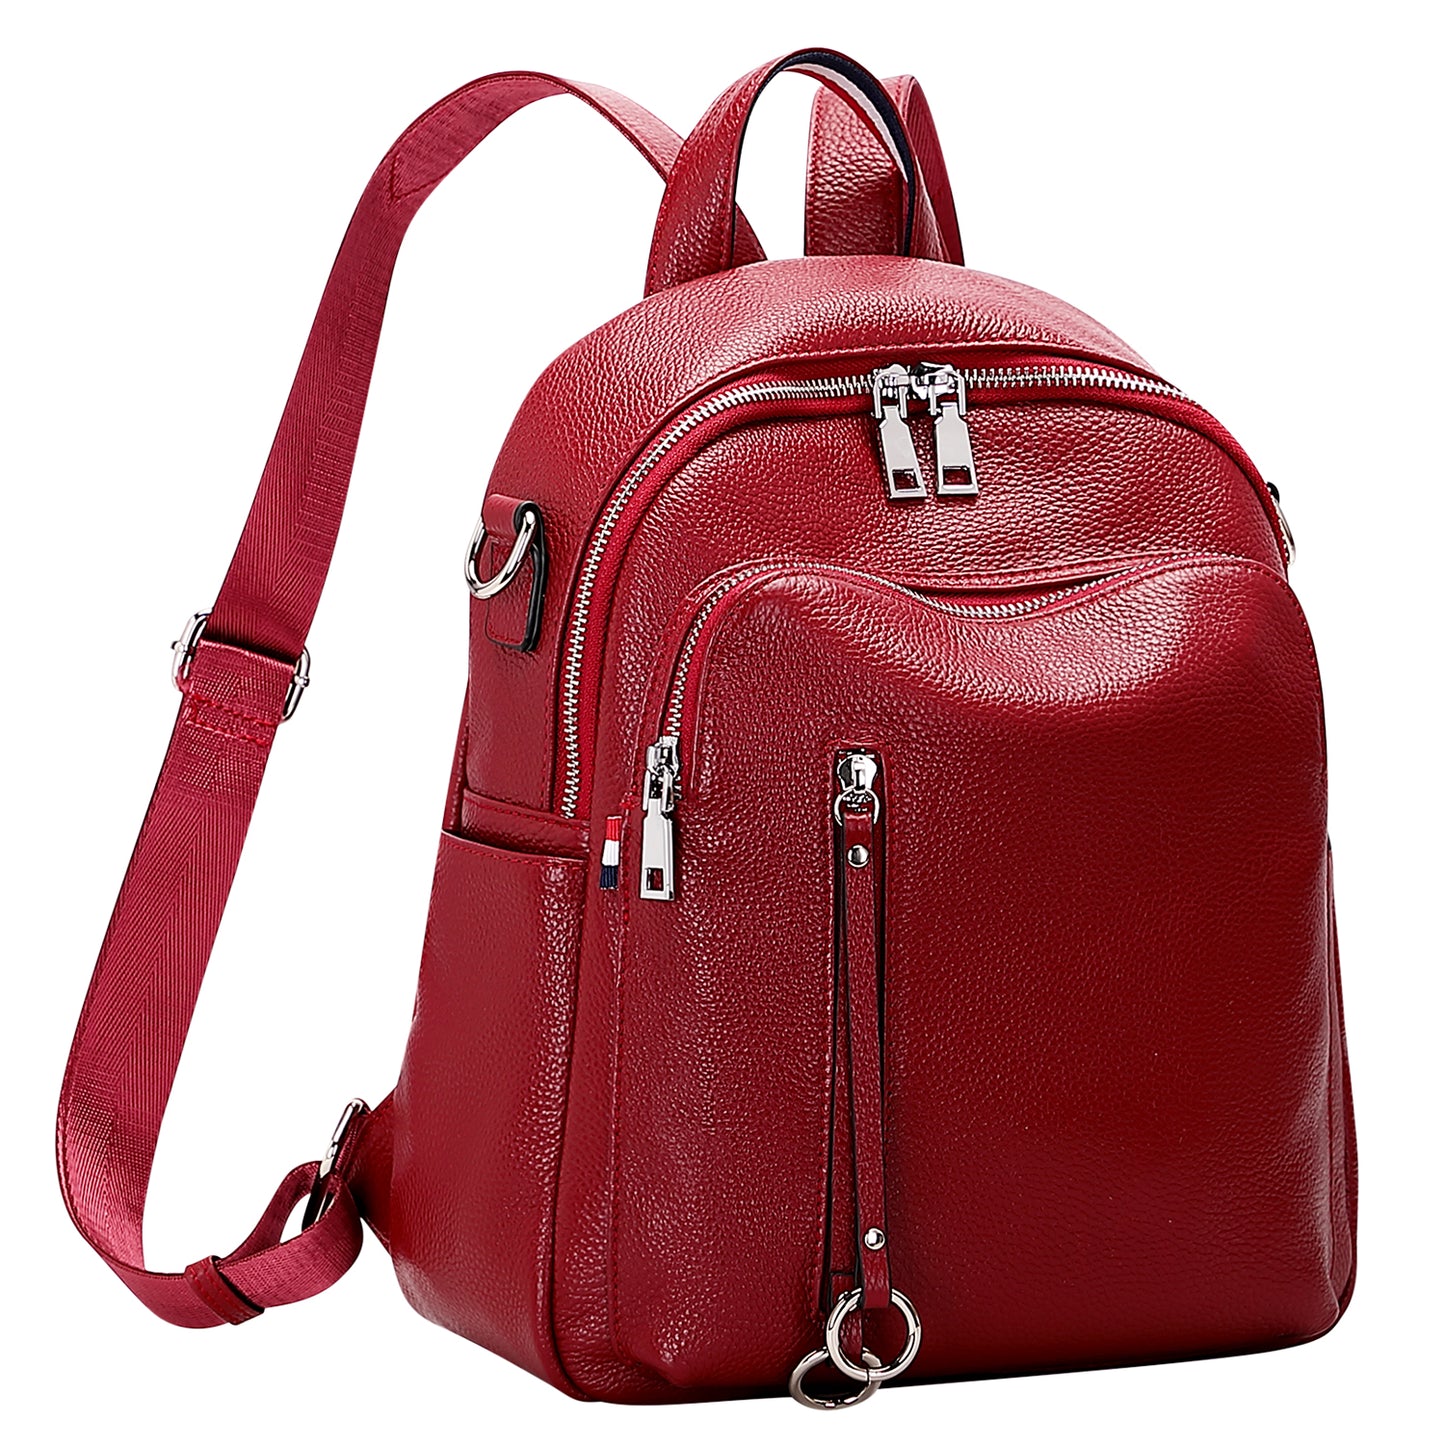 ALTOSY Leather Backpack Purse Medium